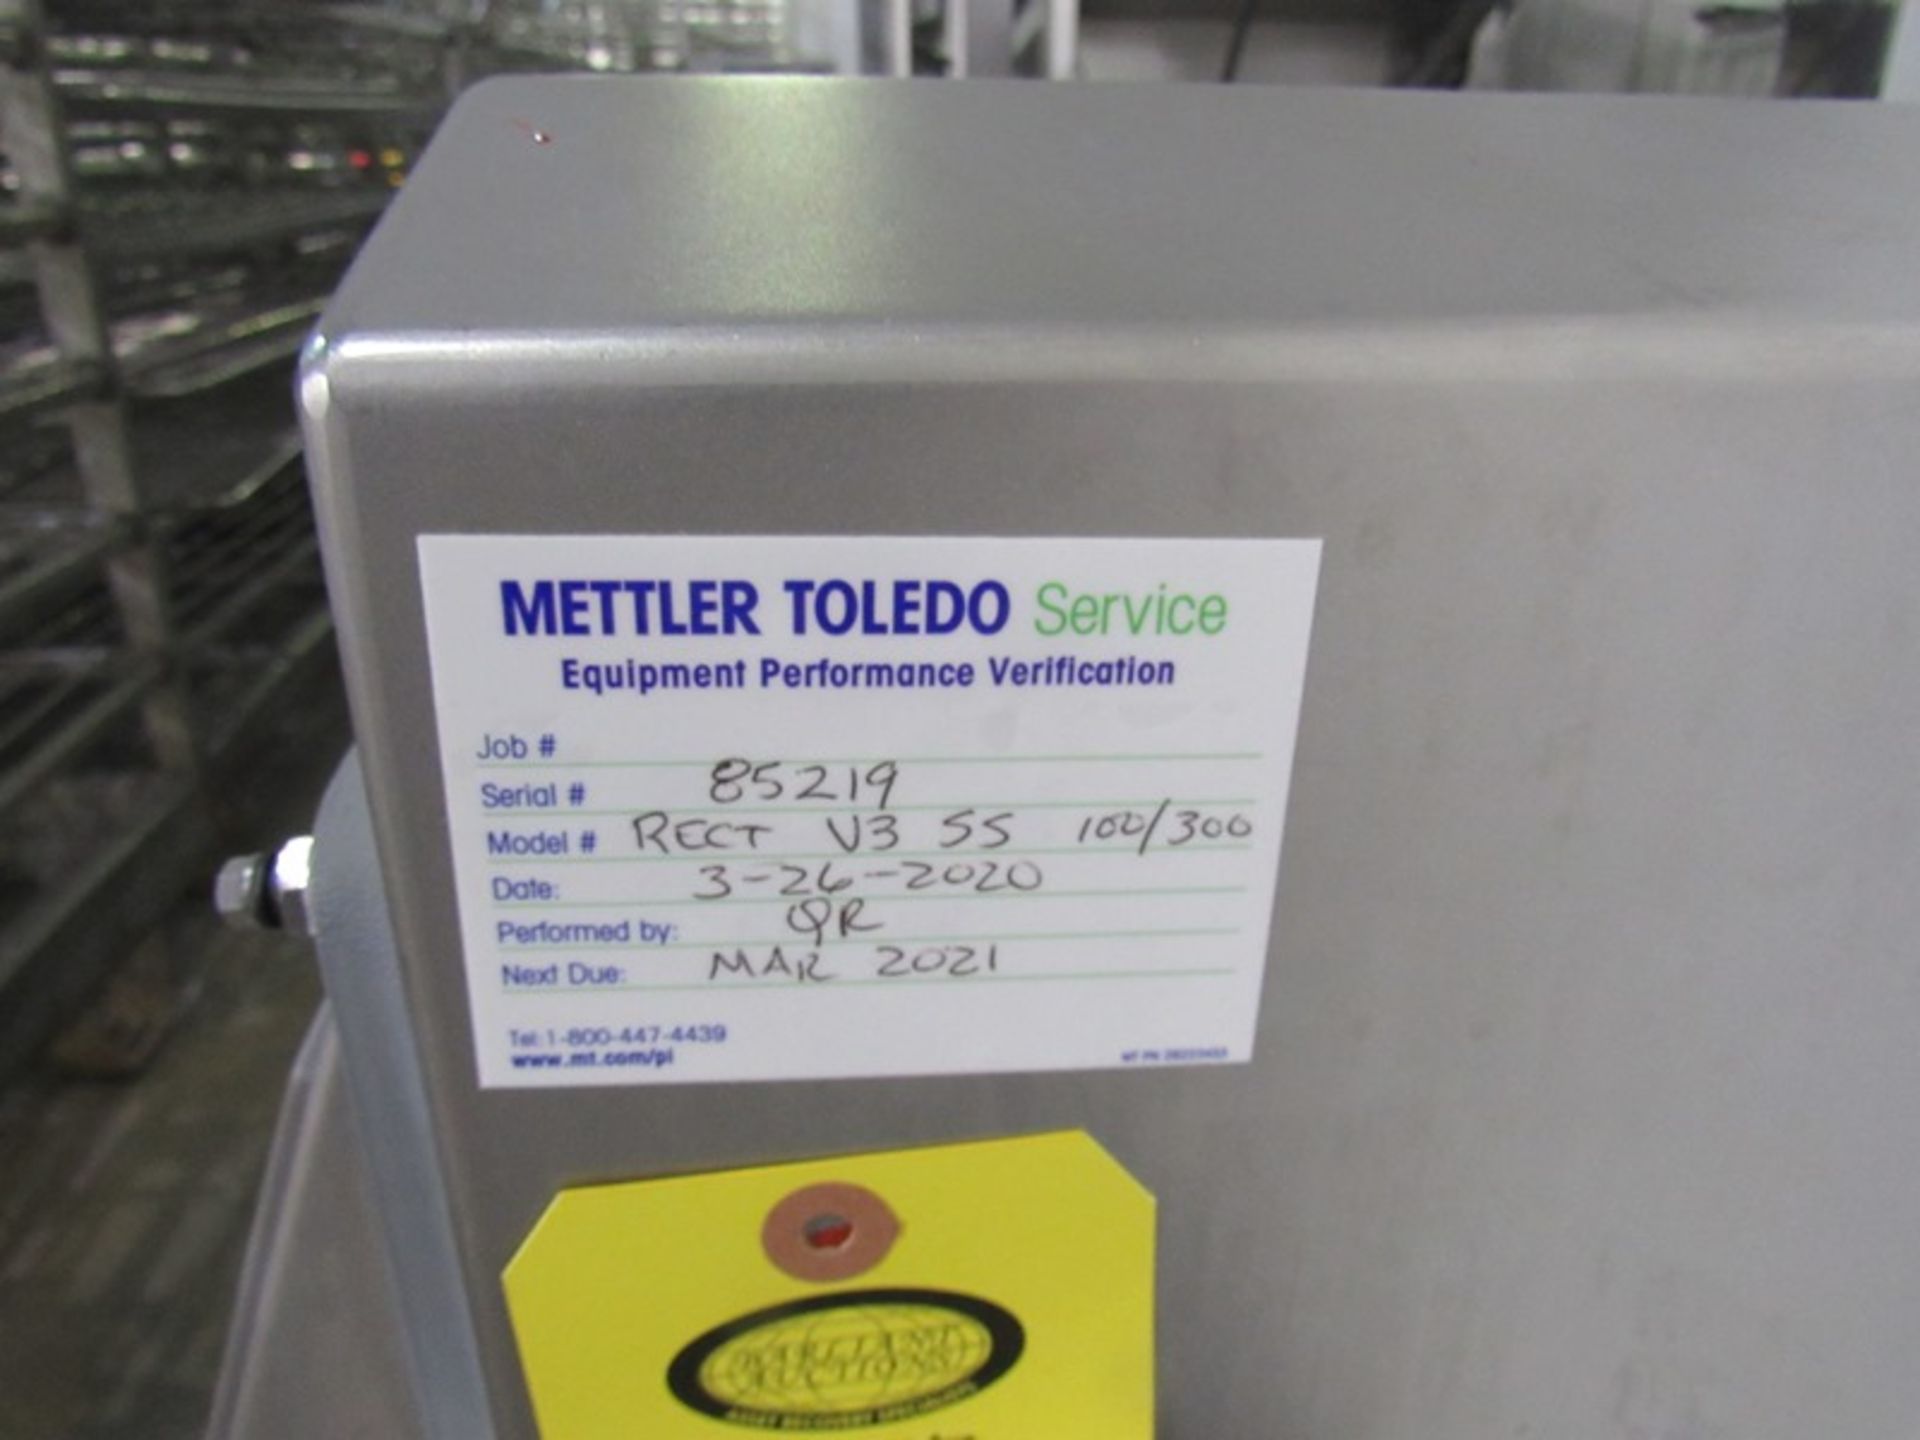 Mettler Toledo Safeline Mdl. RECT V3 SS 100/300 Metal Detector, 6" T X 19 3/4" W aperture, 18" W X - Image 6 of 6